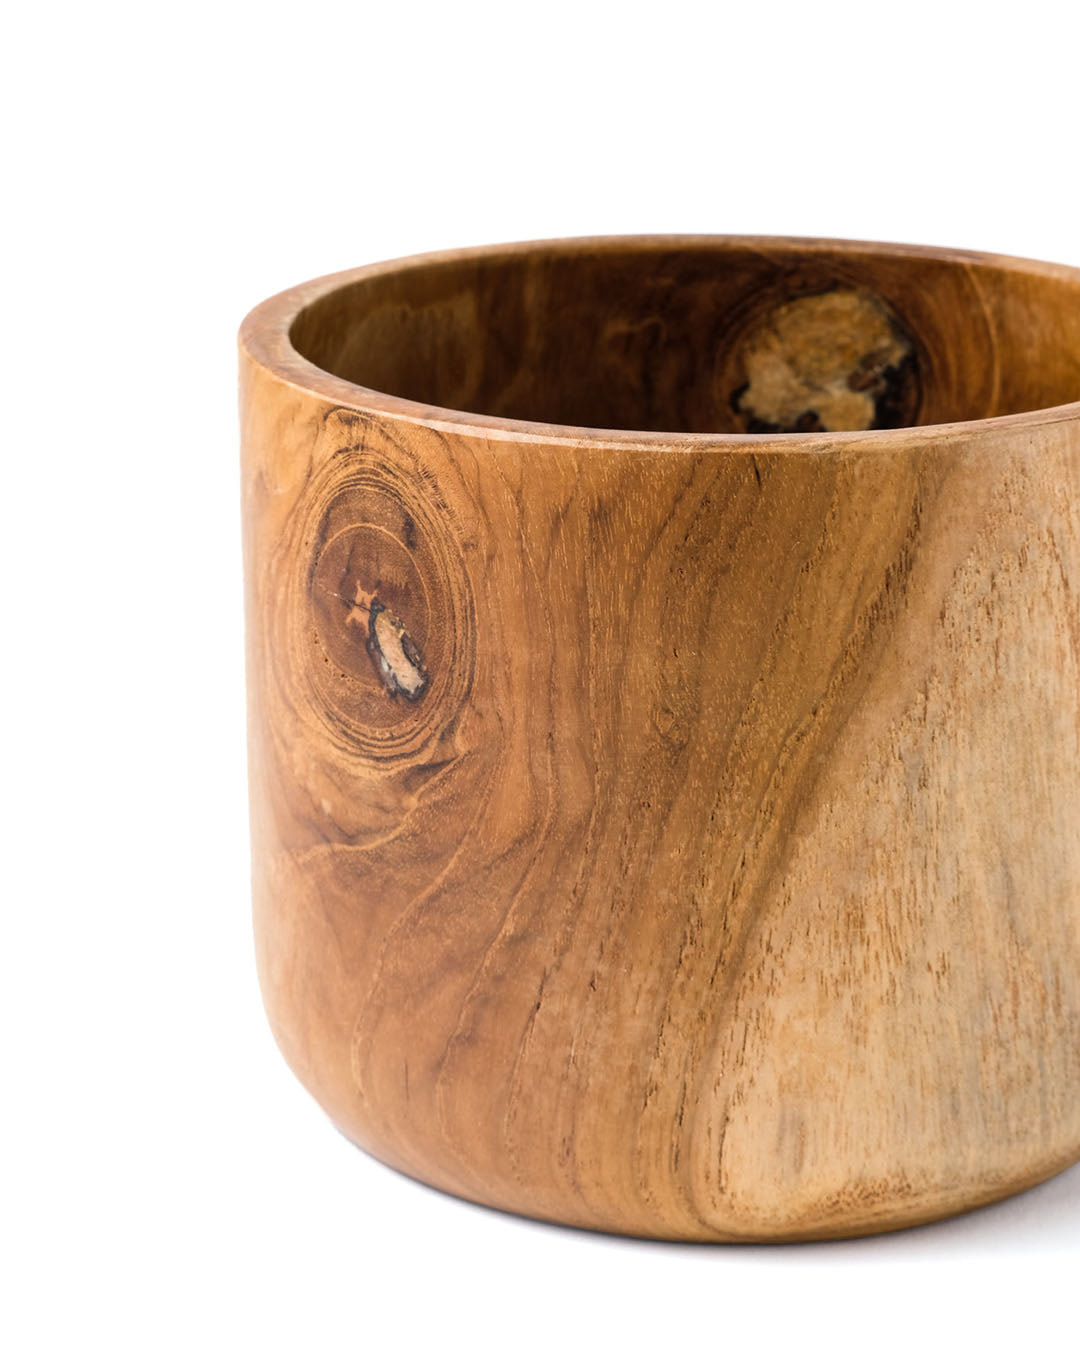 Bowl de madera maciza de teca natural Jombang, cilíndrico, acabado natural, hecho a mano, 15 cm de diámetro, origen Indonesia